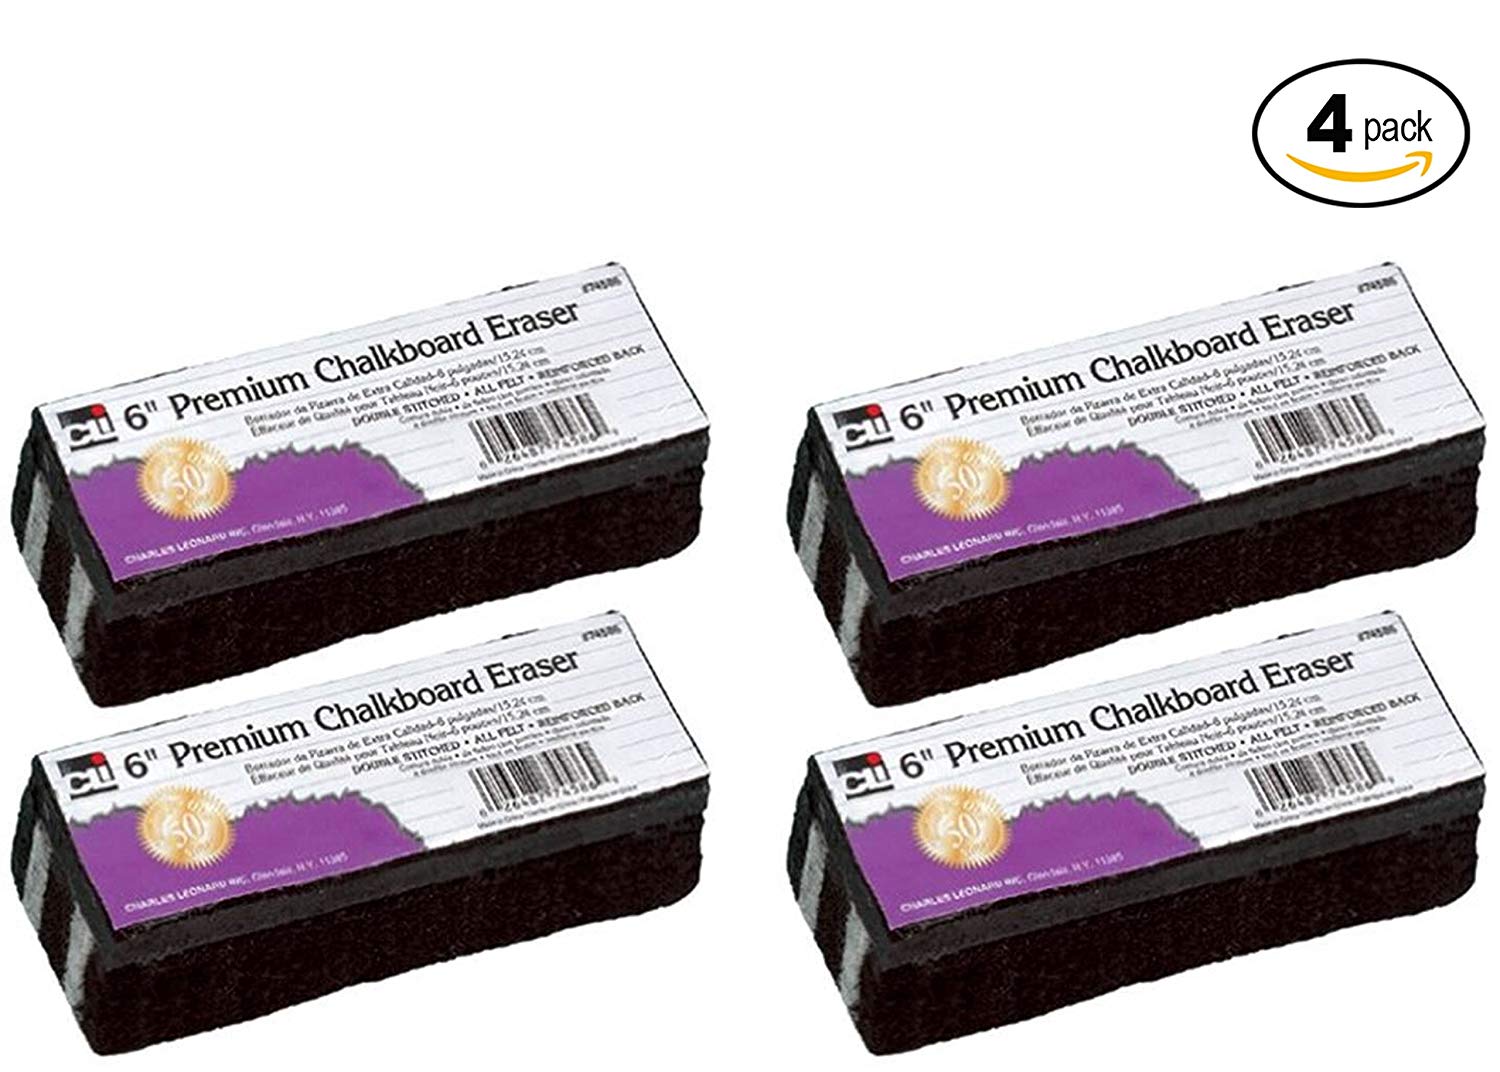 Charles Leonard Chl74586 Premium Chalkboard Eraser Set - 4 pack Bundle Kit